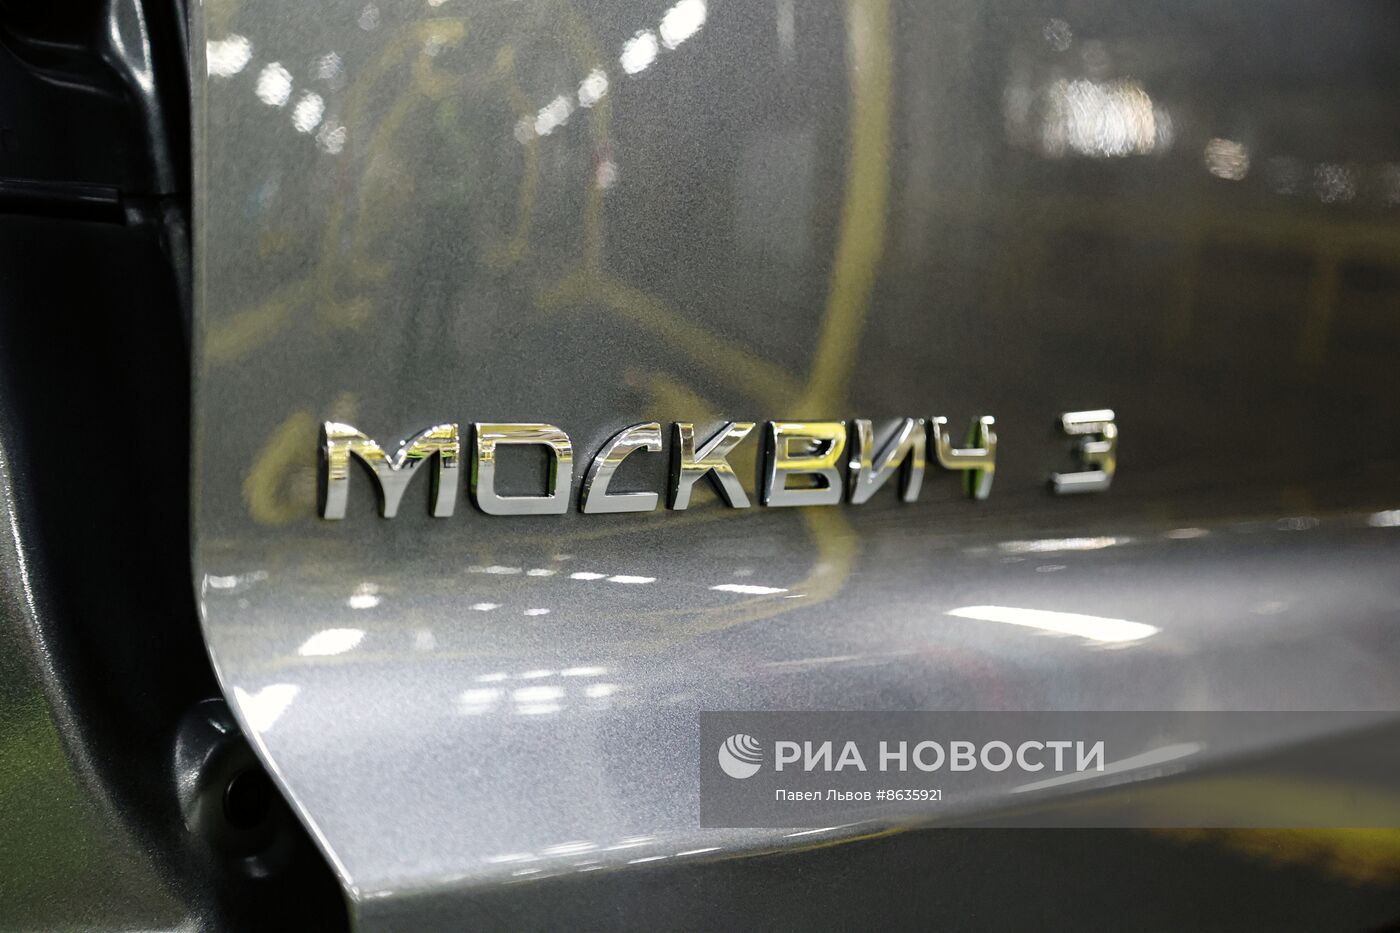 Производство автомобилей на заводе "Москвич"